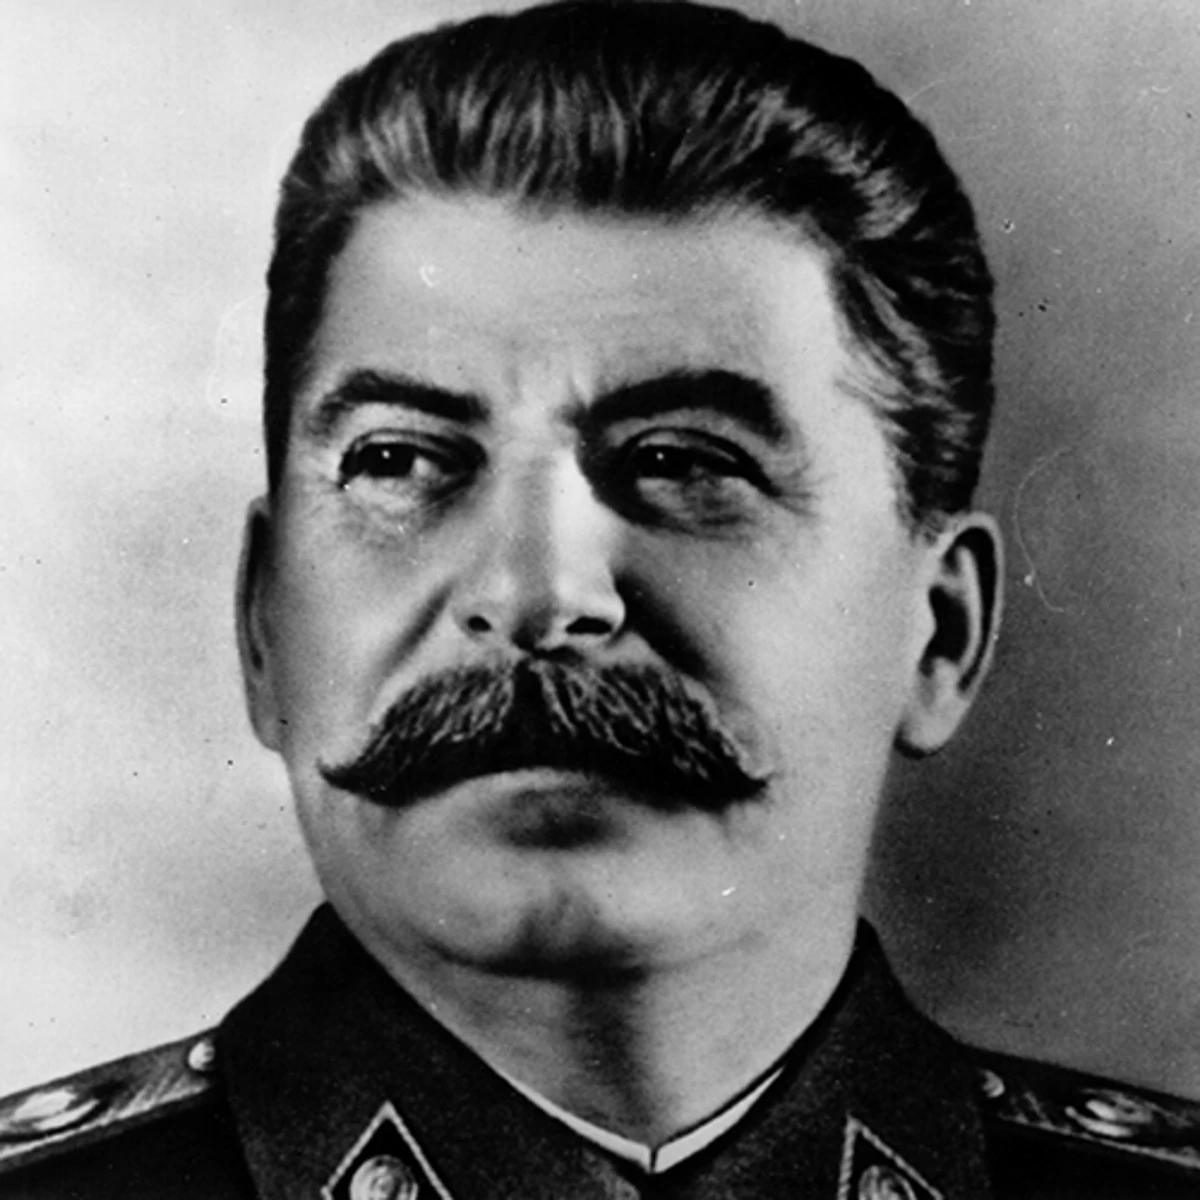 File:Stalin photo.png